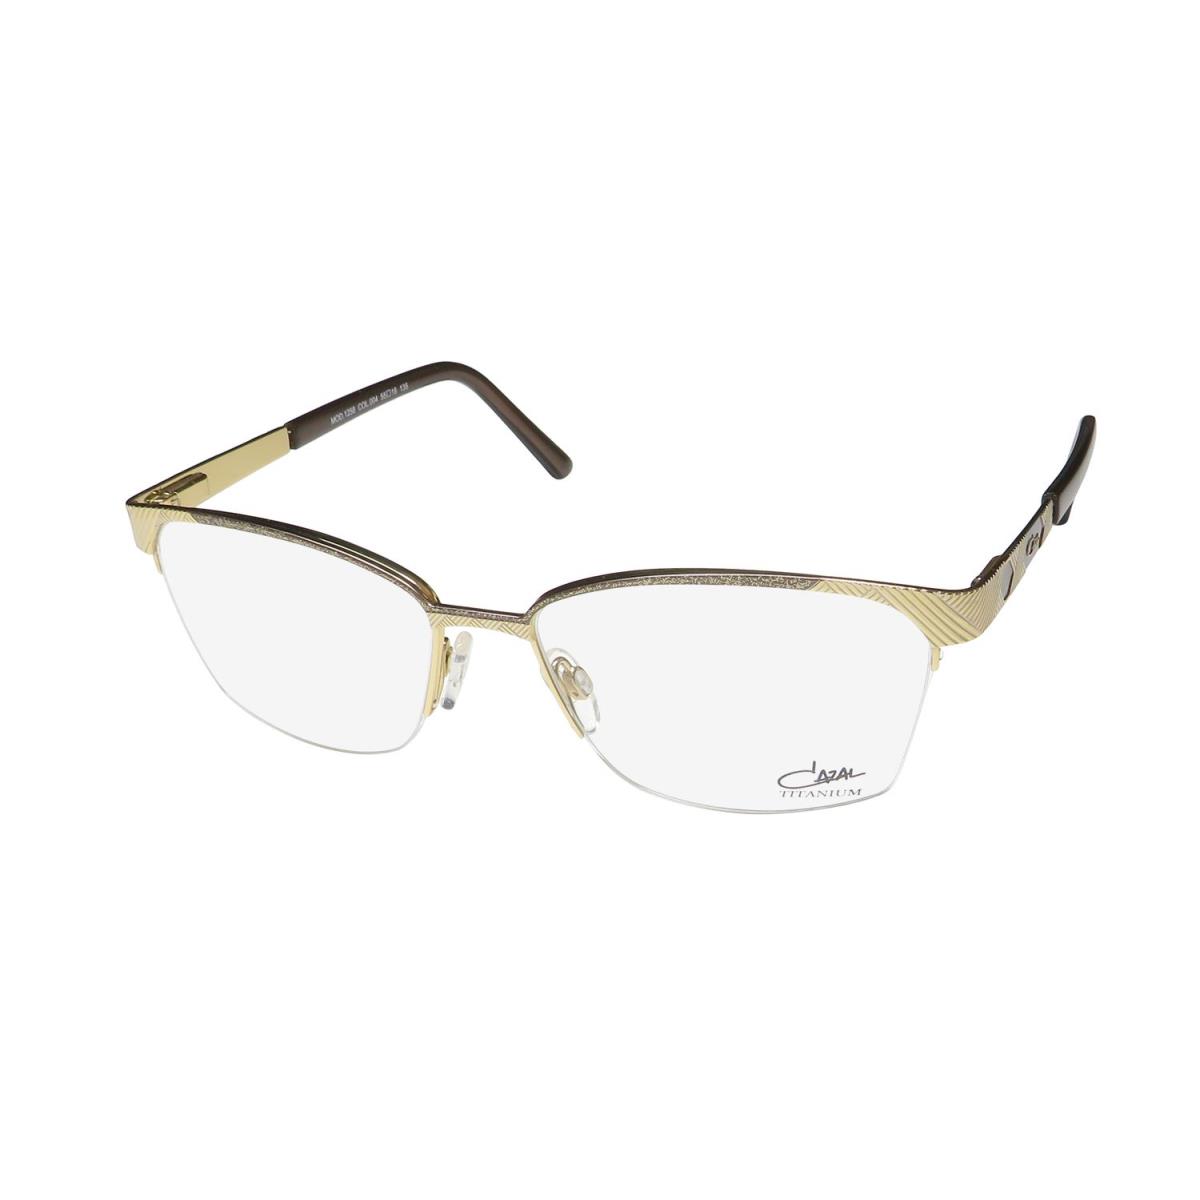 Cazal 1258 Titanium Semi-rimless Made IN Germany Designer Eyeglass Frame/glasses Gold / Brown